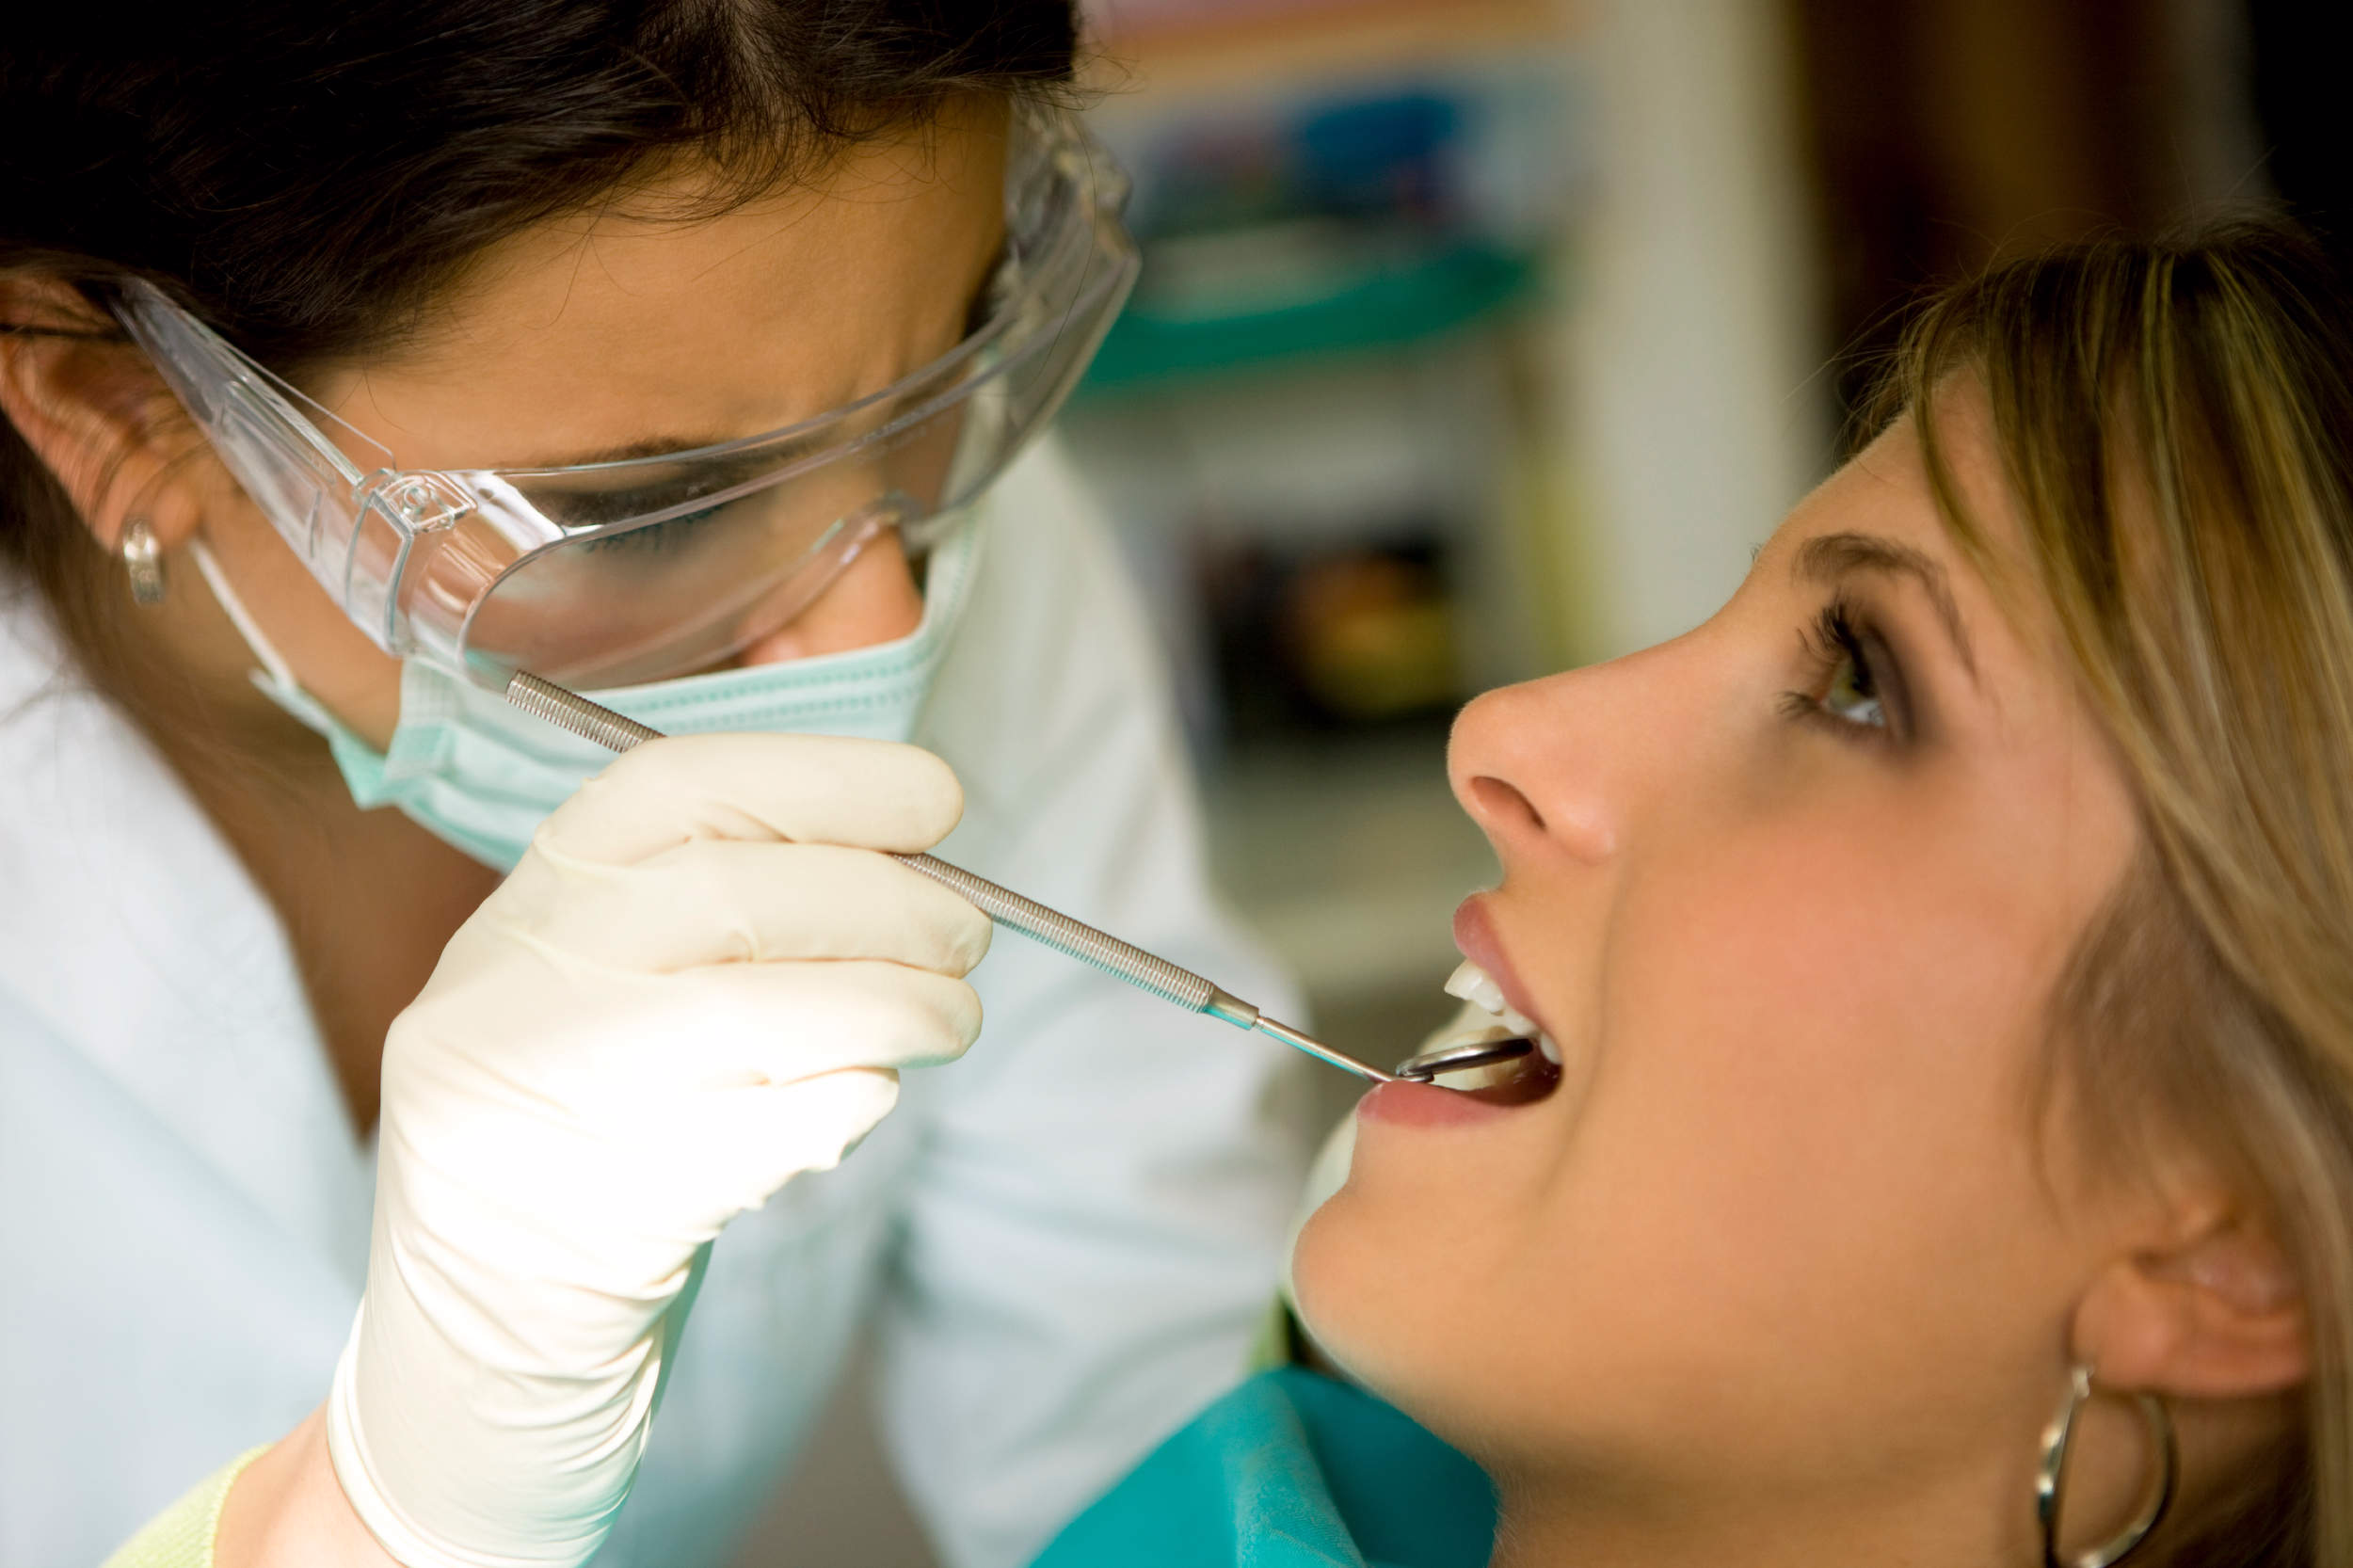 Dental filling by Holistic Dentist in New York - Biological Doctor